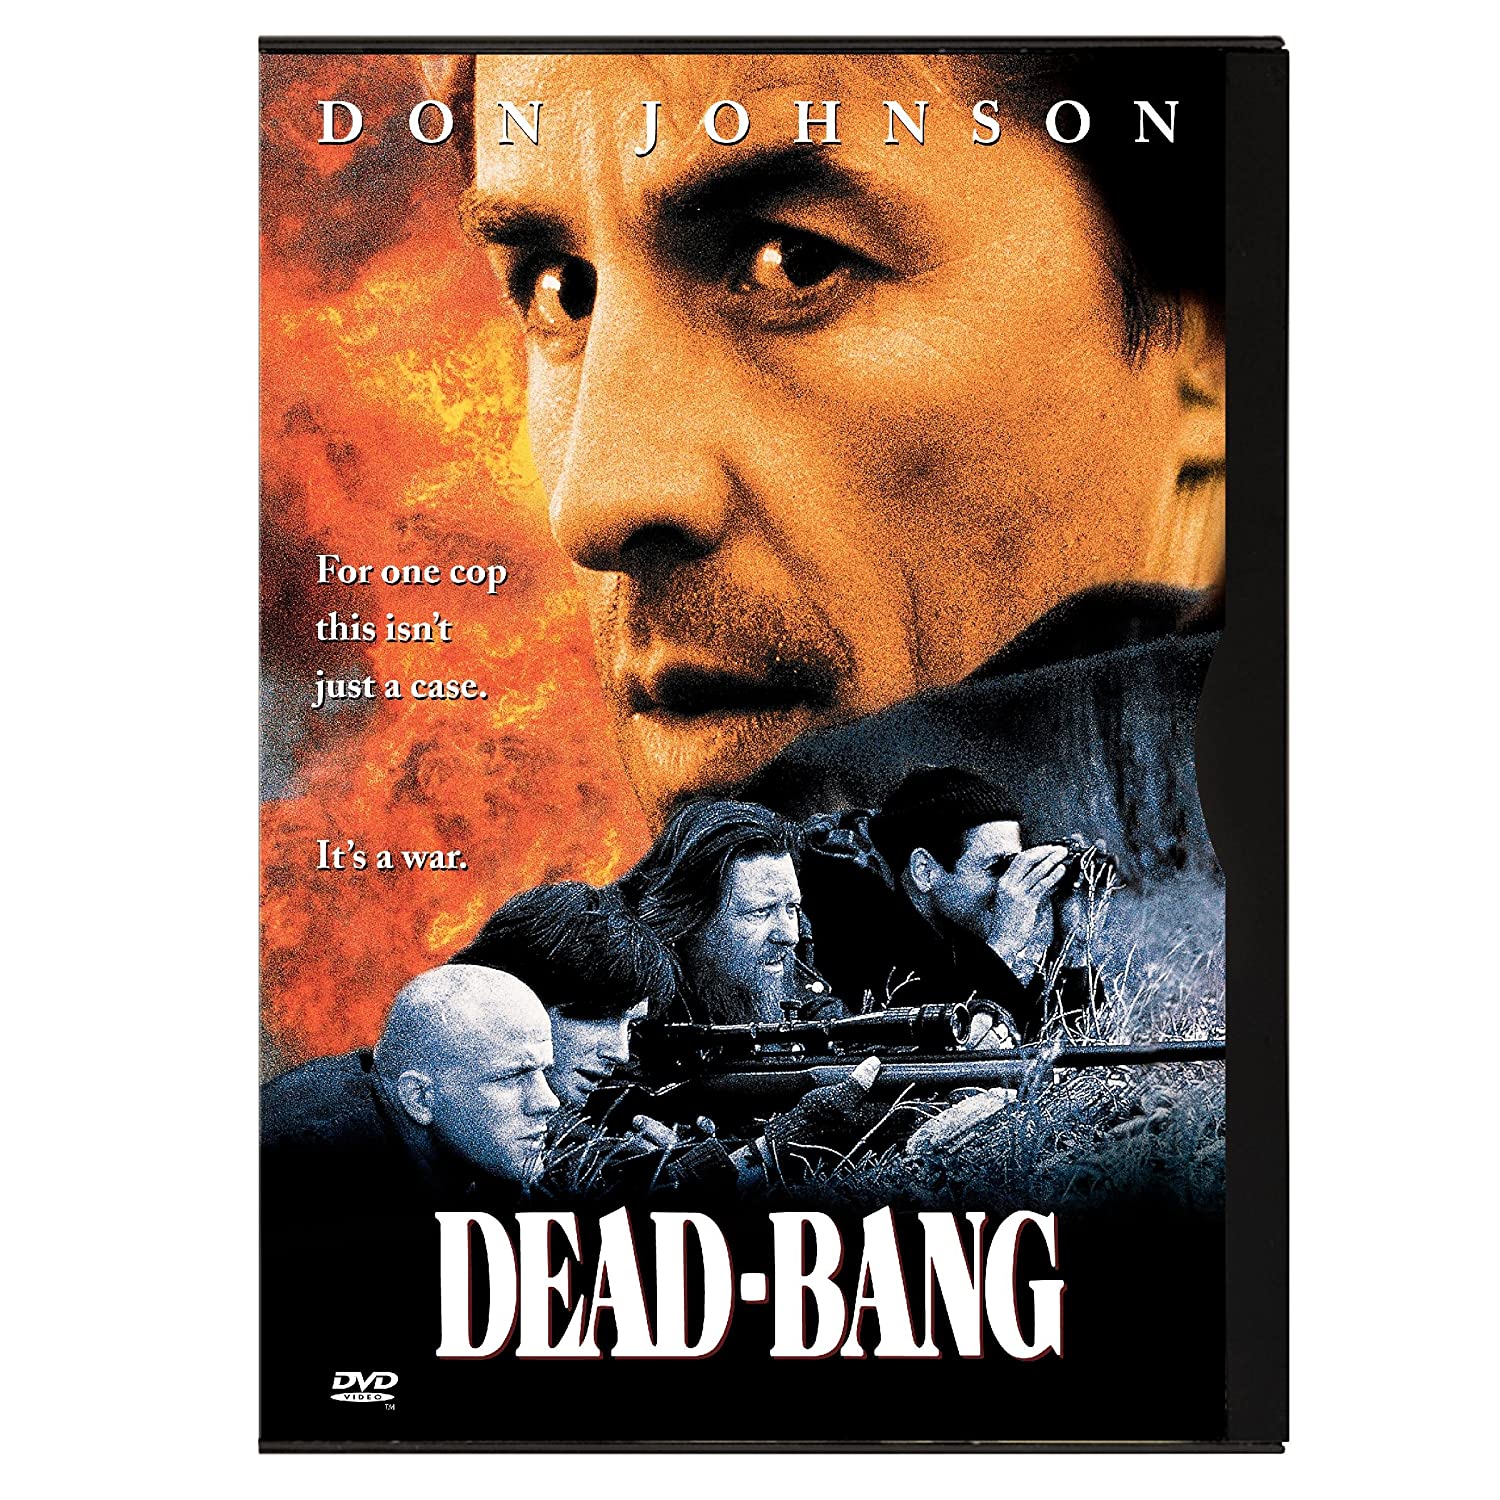 Dead Bang - 1989 - John Frankenheimer A1PMadvh7rL._AA1500_